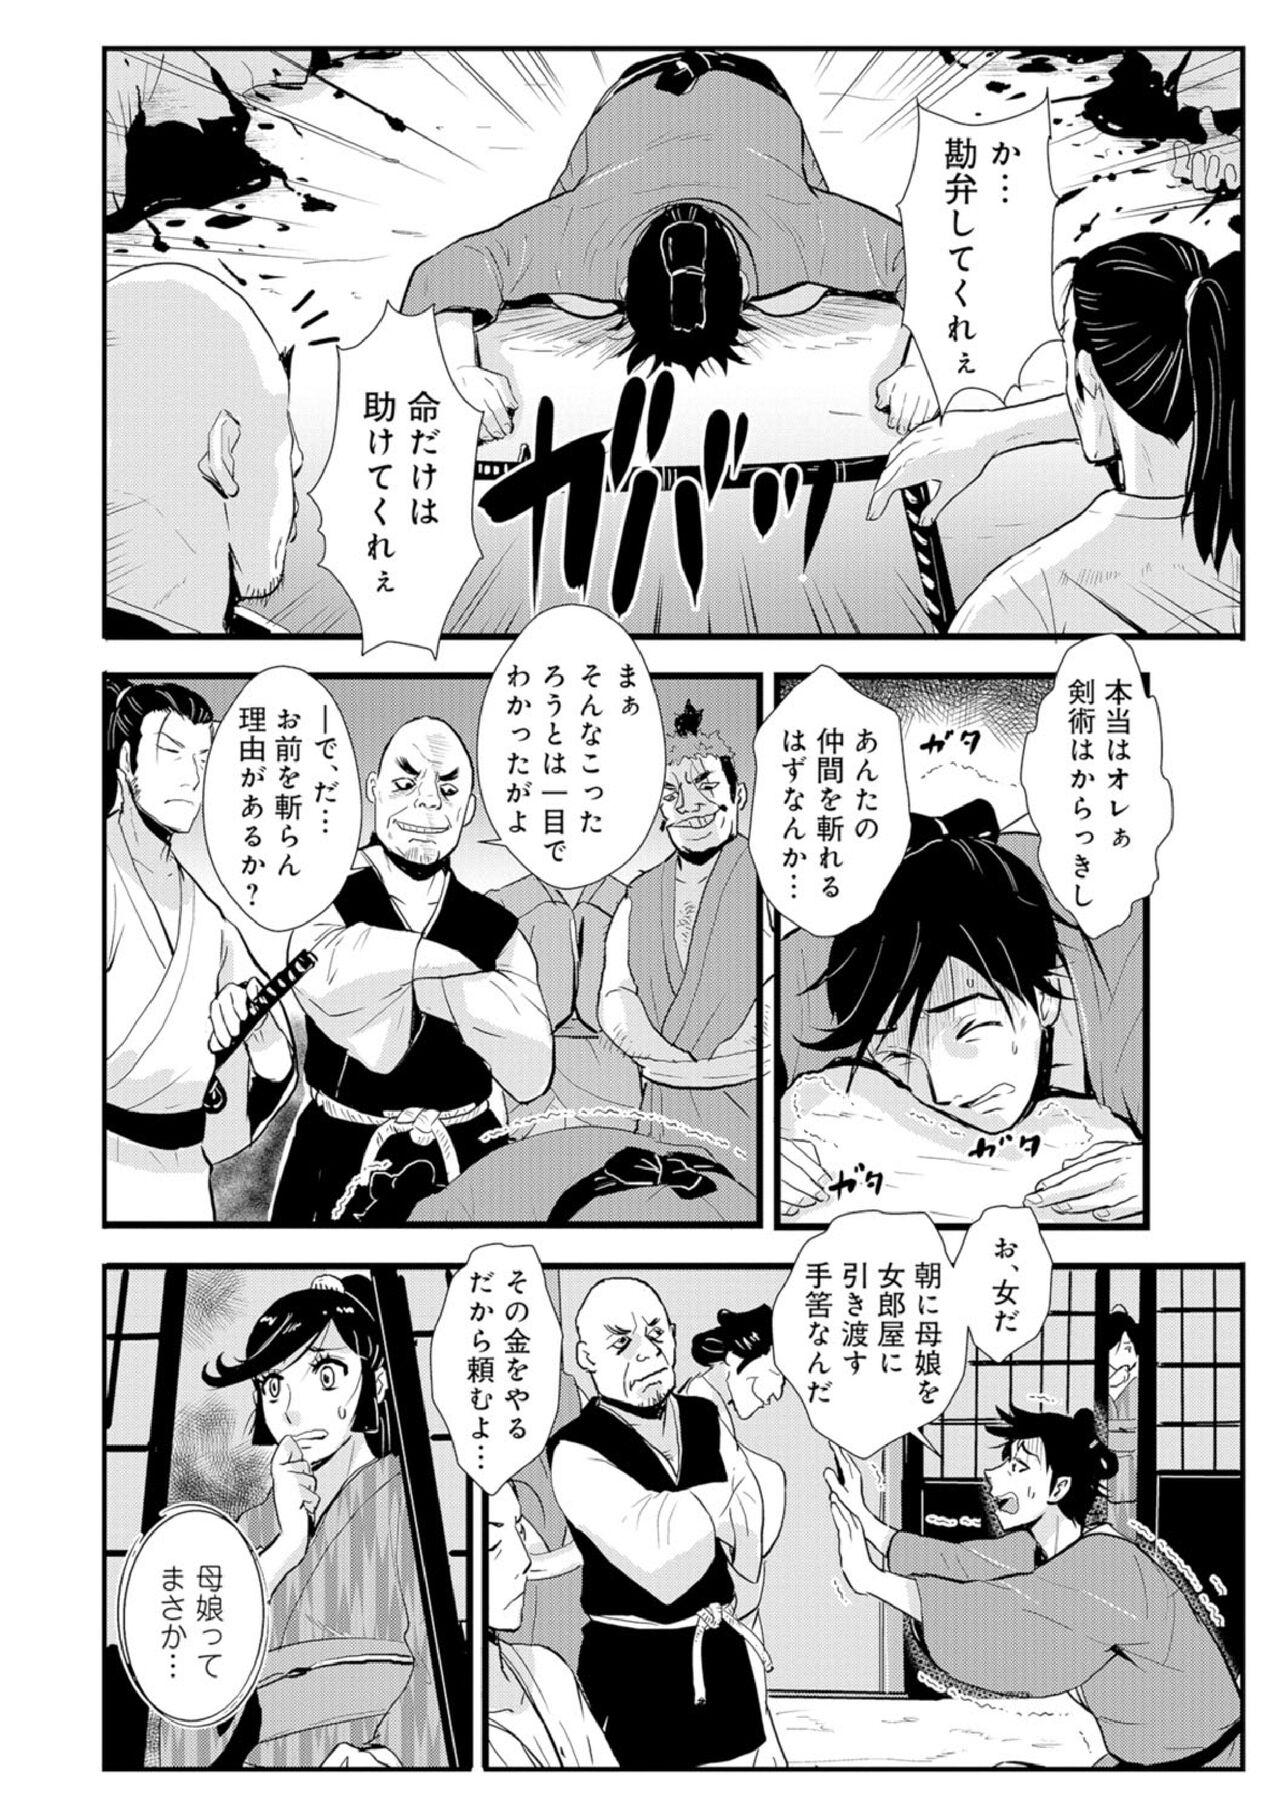 Virgin Harami samurai 03 18yearsold - Page 10